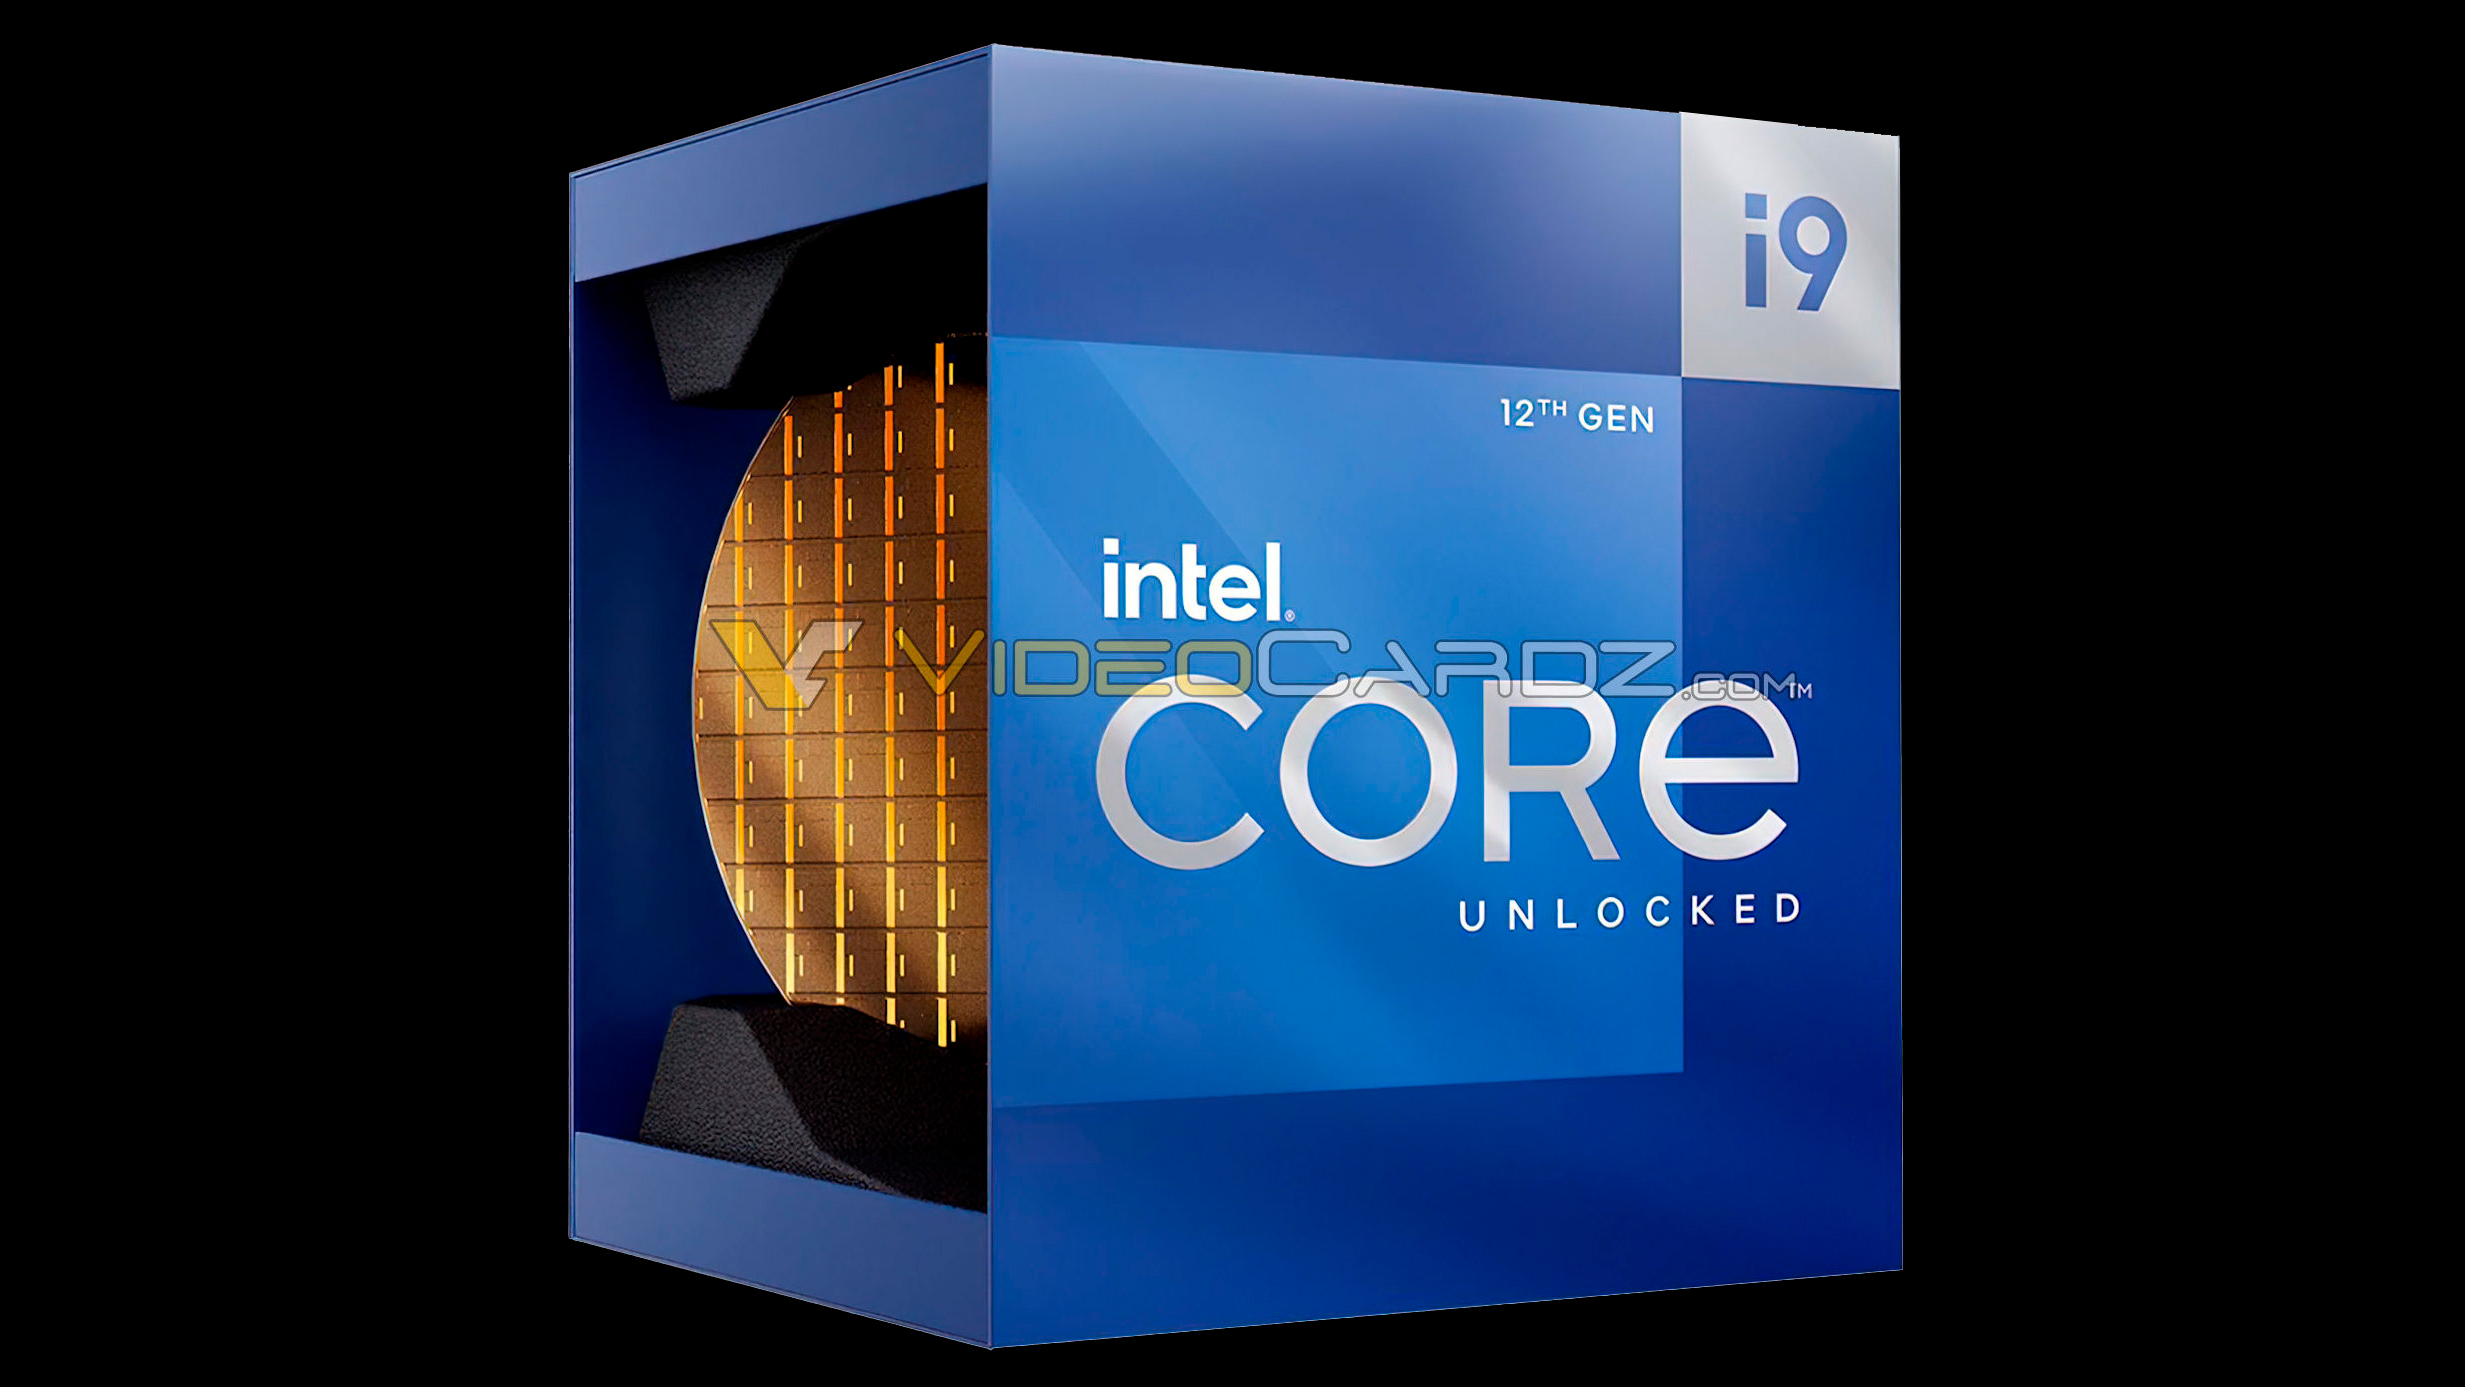 Intel 12th gen